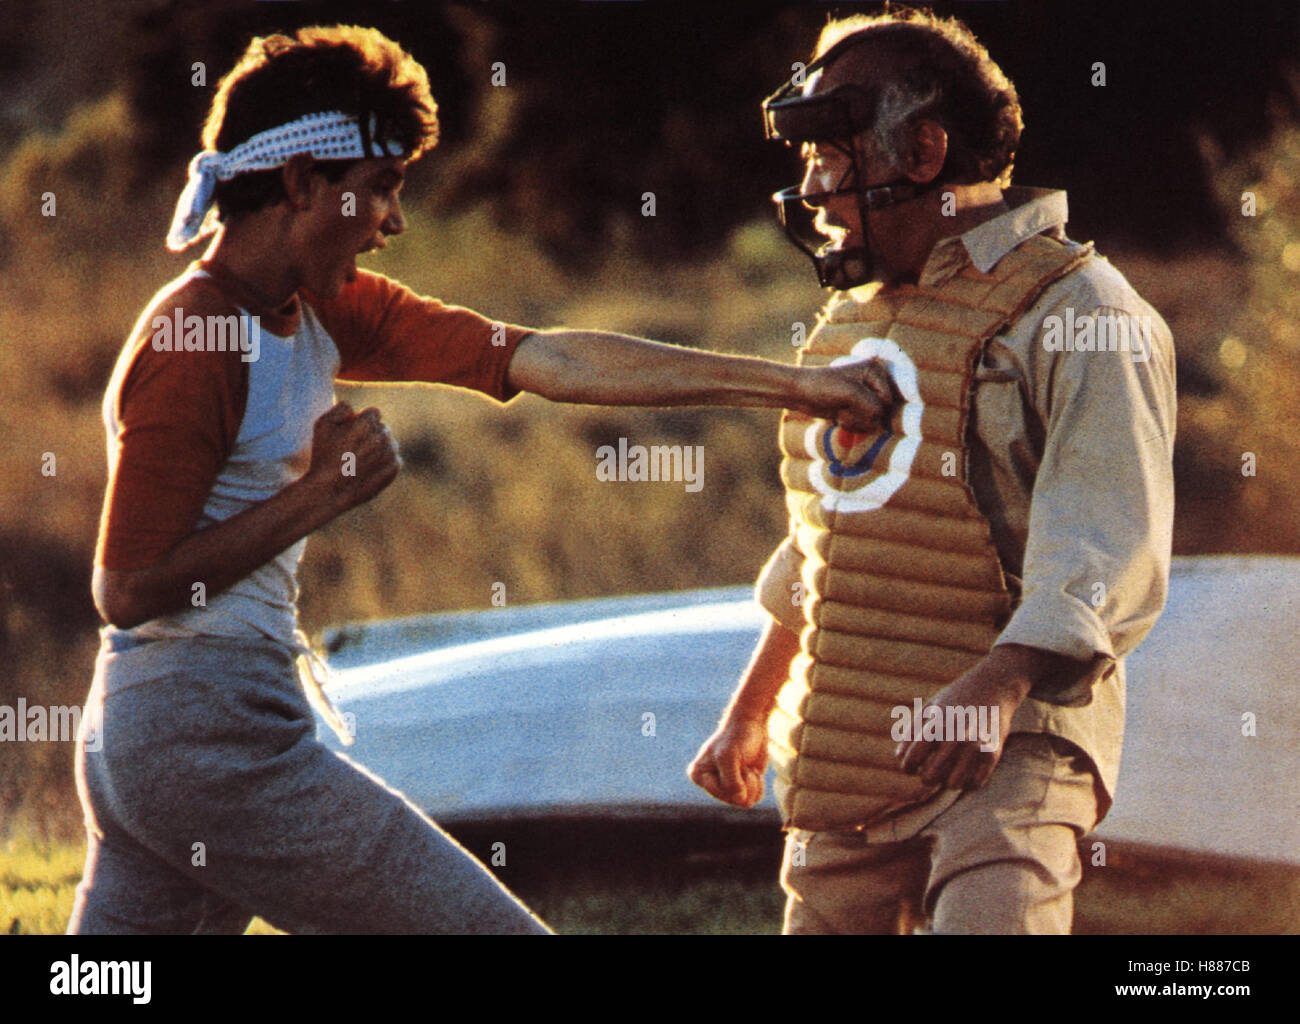 Karate Kid, (THE KARATE KID) USA 1983, Regie: John G. Avildsen, RALPH MACCHIO, NORIYUKI PAT MORITA, Stichwort: Kampfsport, Karate, Schutzkleidung, Kopfschutz Stock Photo